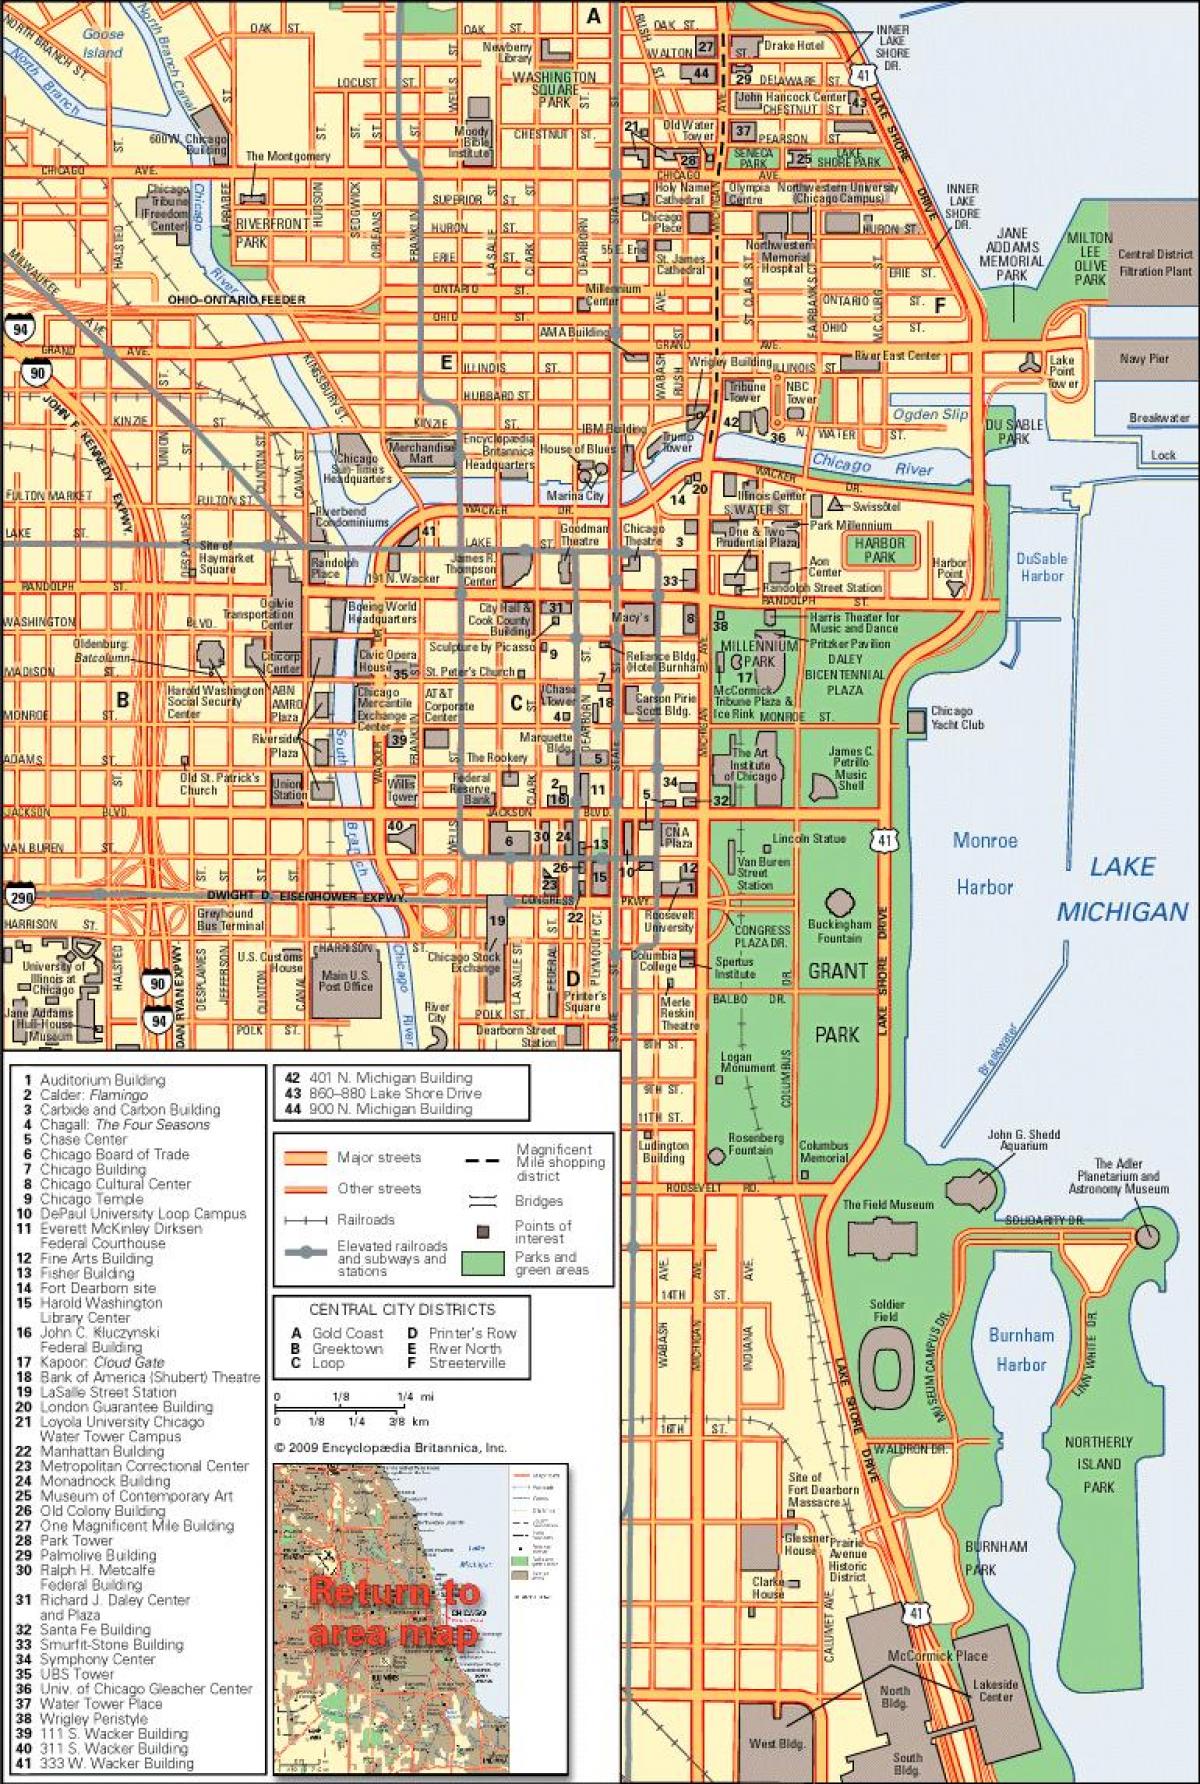 мапа града Чикага